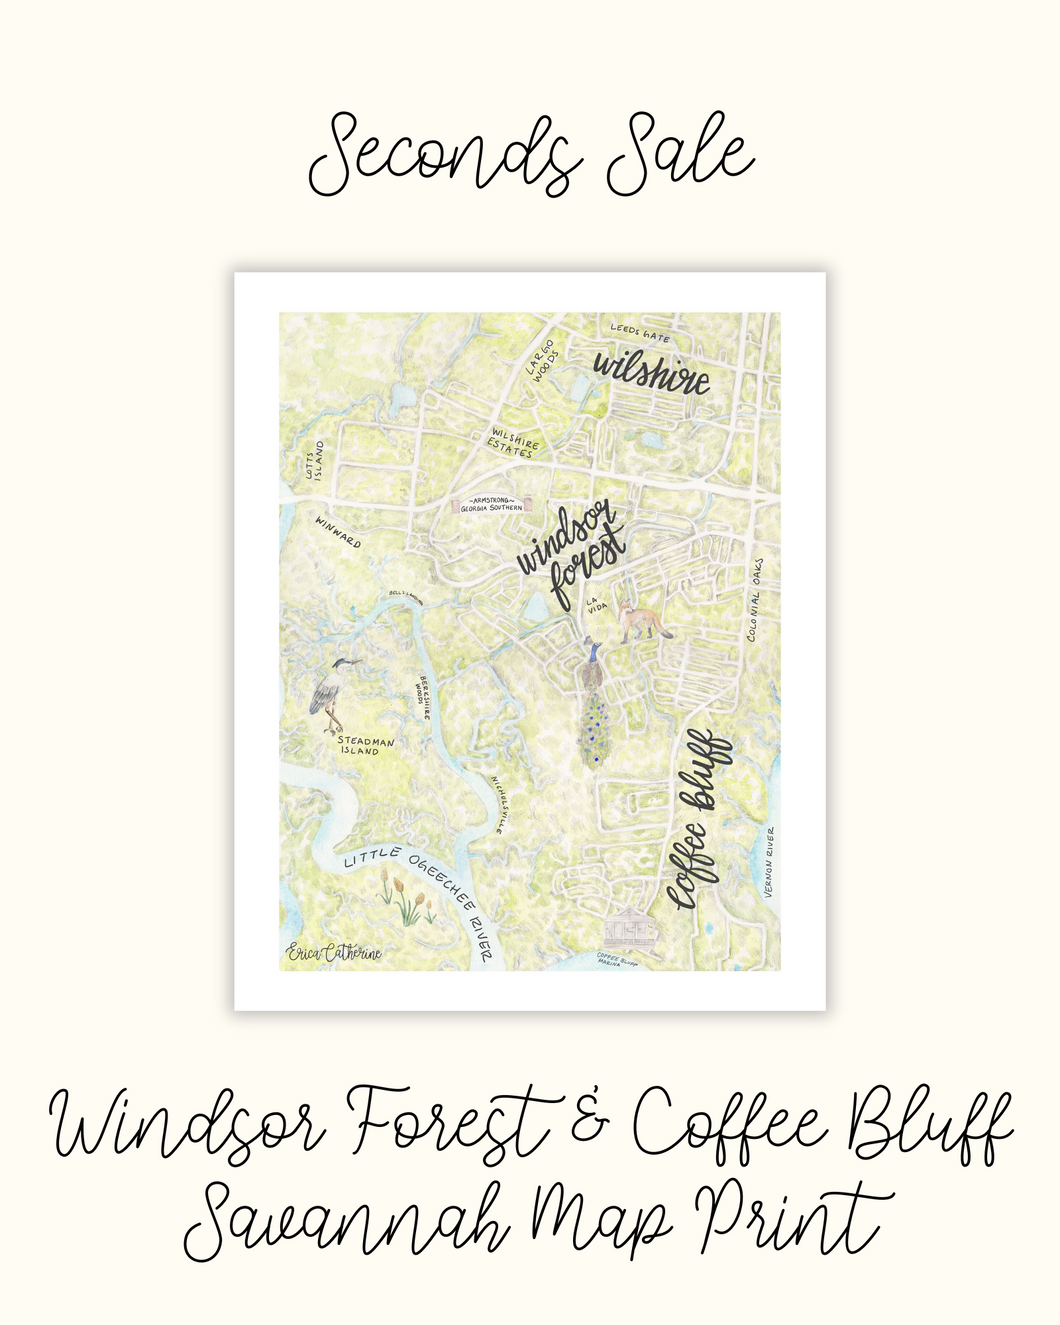 Windsor Forest & Coffee Bluff Savannah Map Print - Seconds Sale